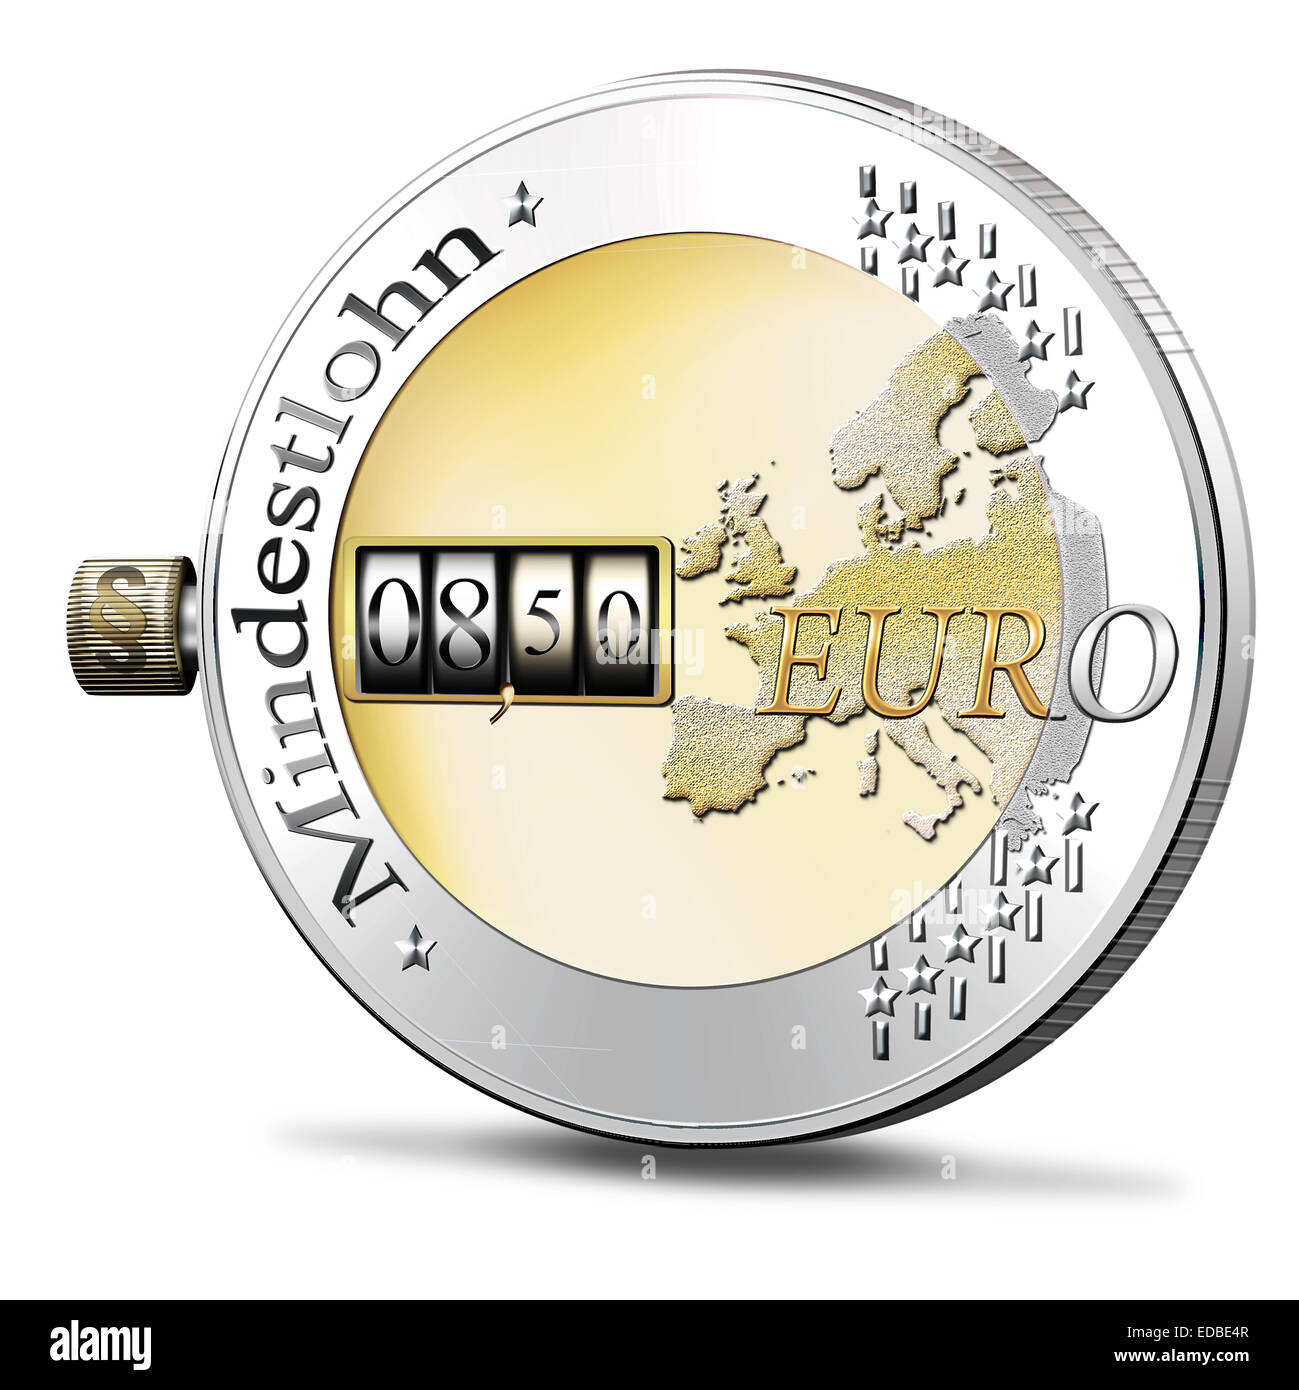 Euro coin inscription Mindestlohn or minimum wage, illustration Stock Photo